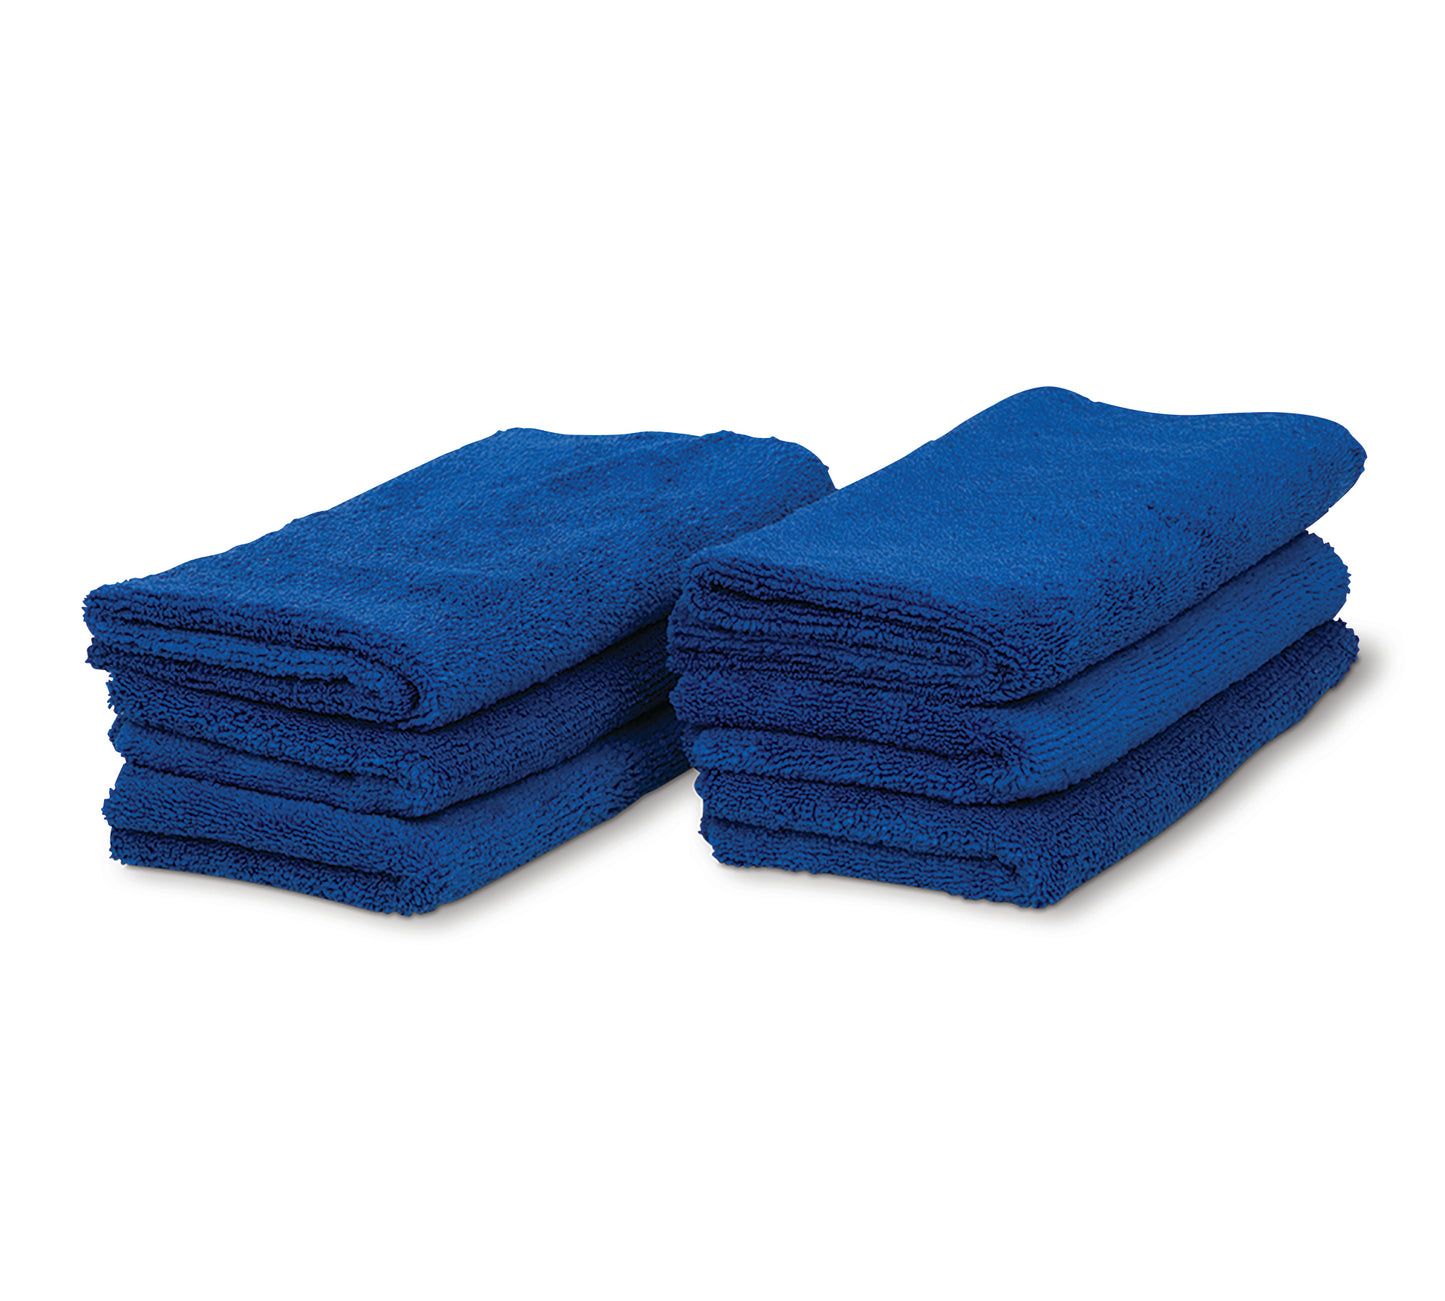 6 BLUE NAVY MICROFIBER CLEANING WASH CLOTH KITCHEN TOWEL 16x16 POLISHING  RAG